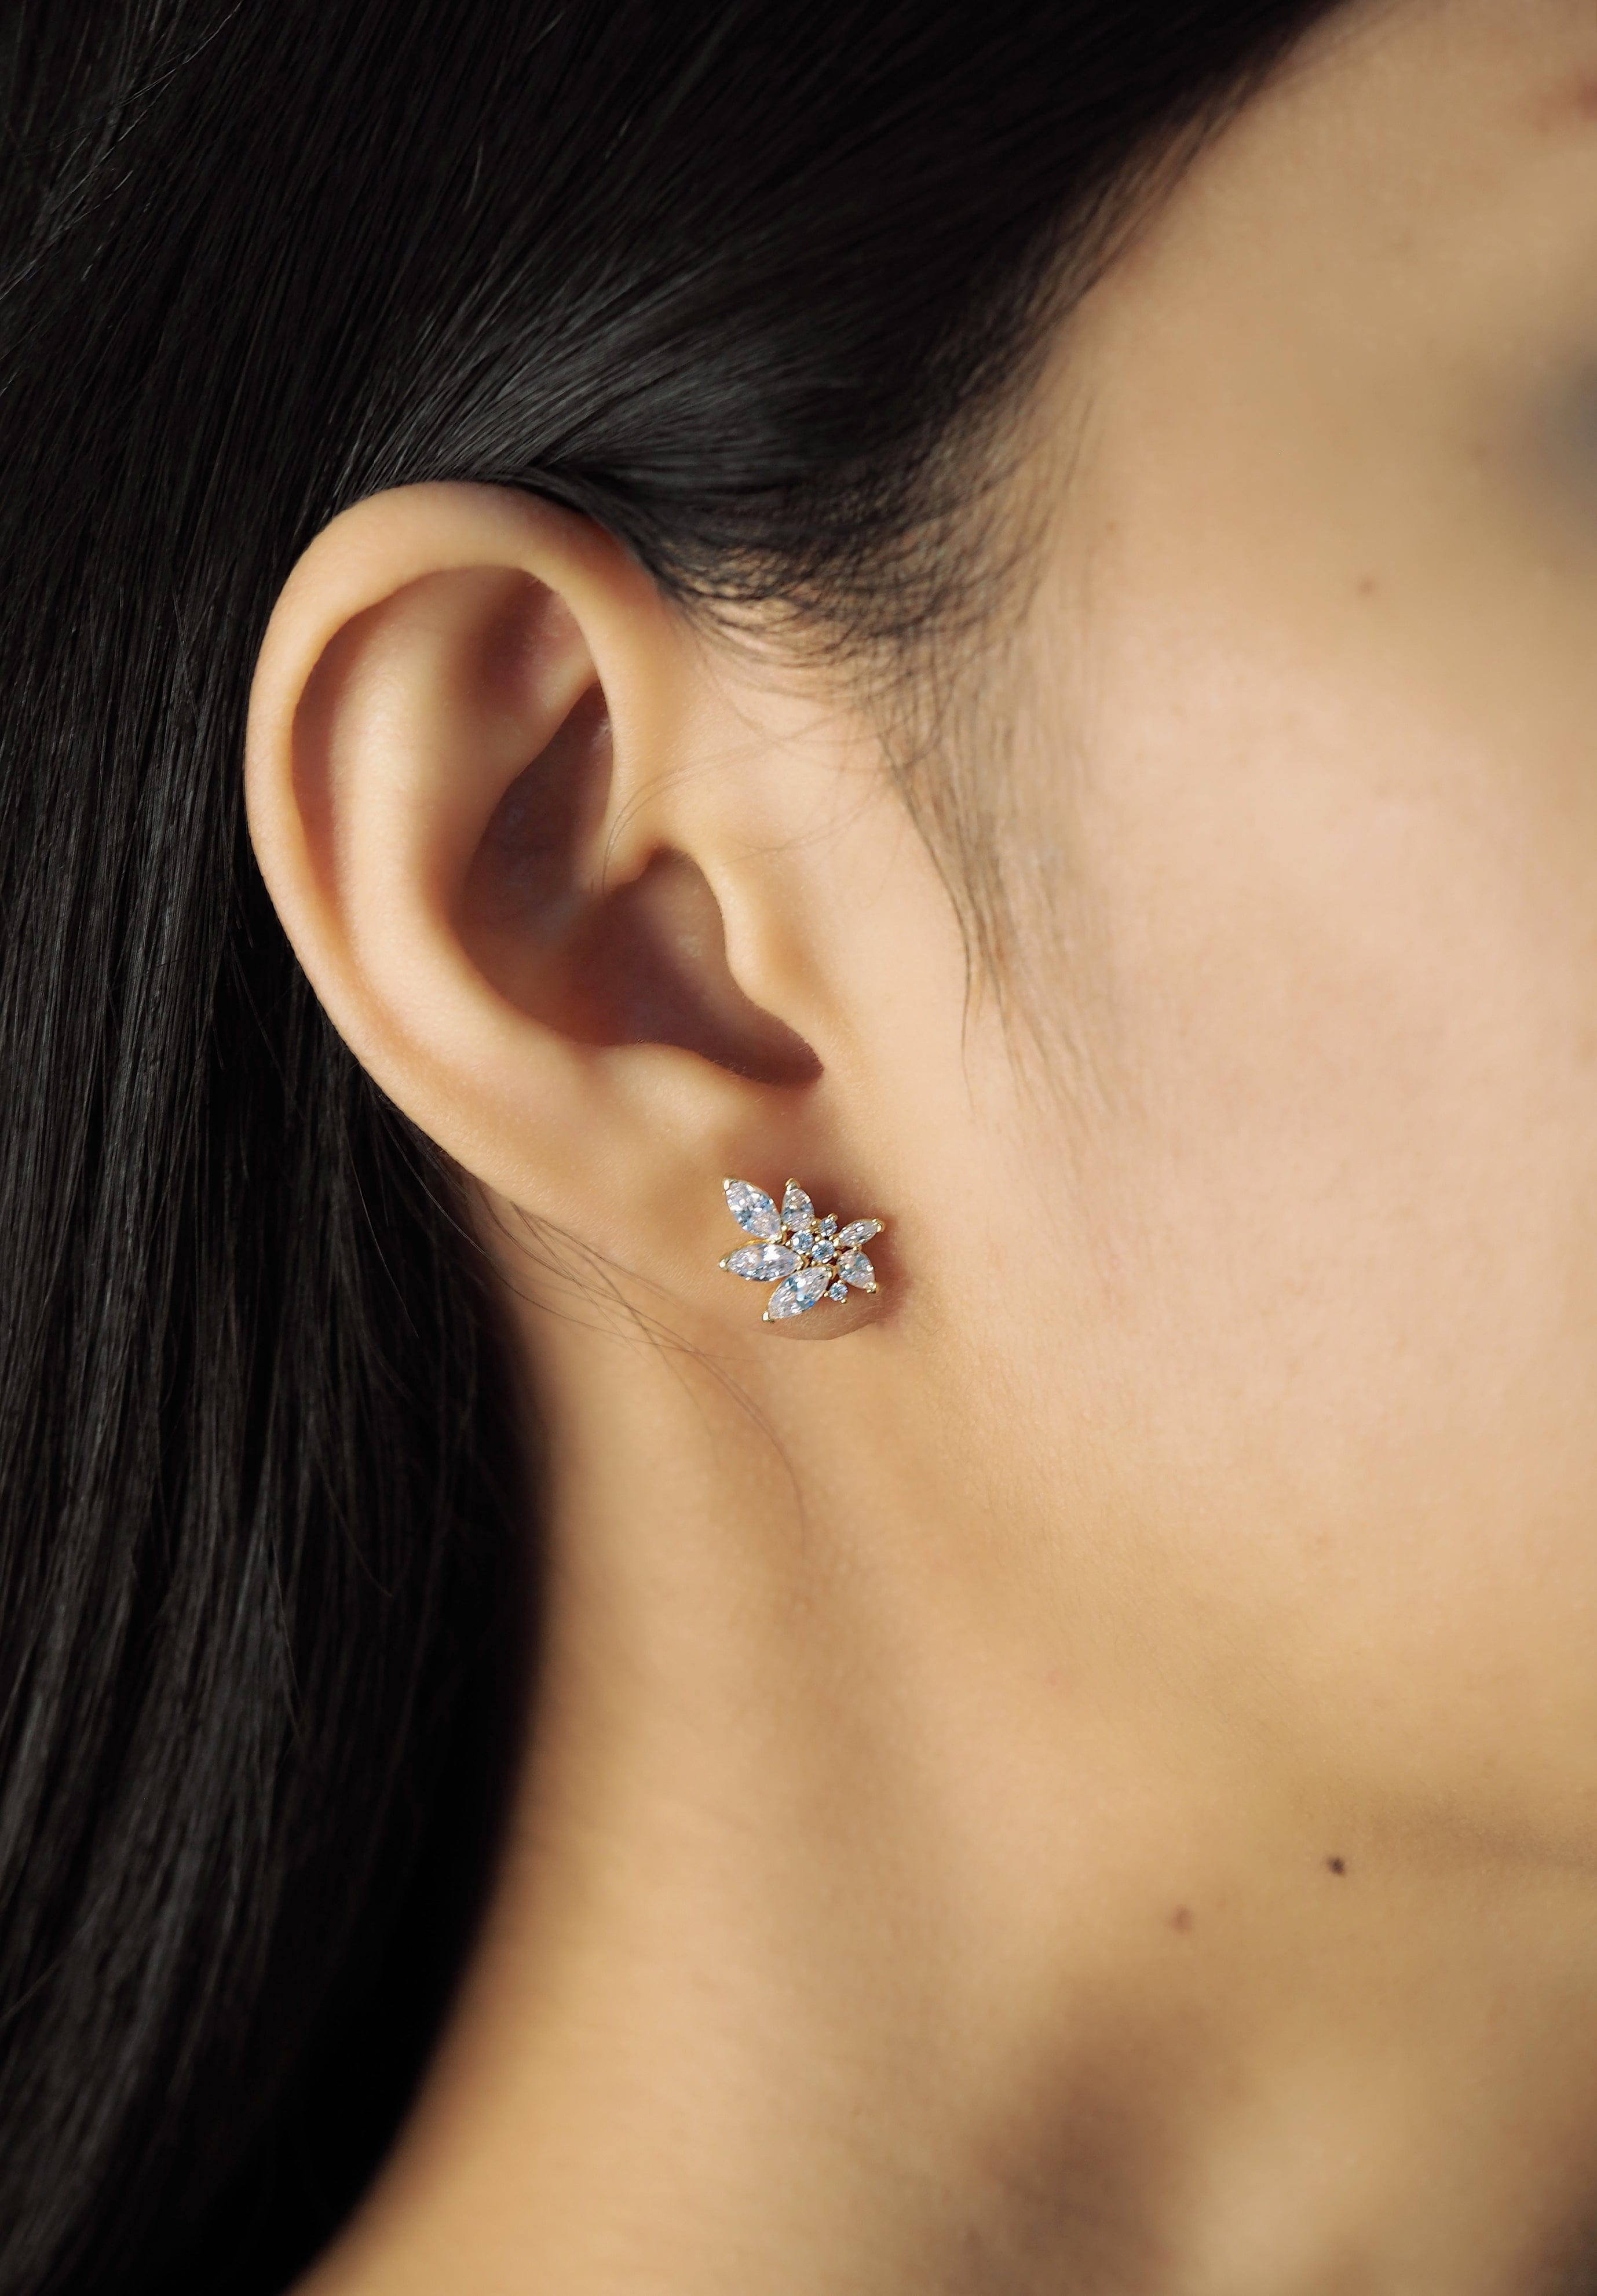 TAI JEWELRY Earrings Cz Cluster Leaf Studs